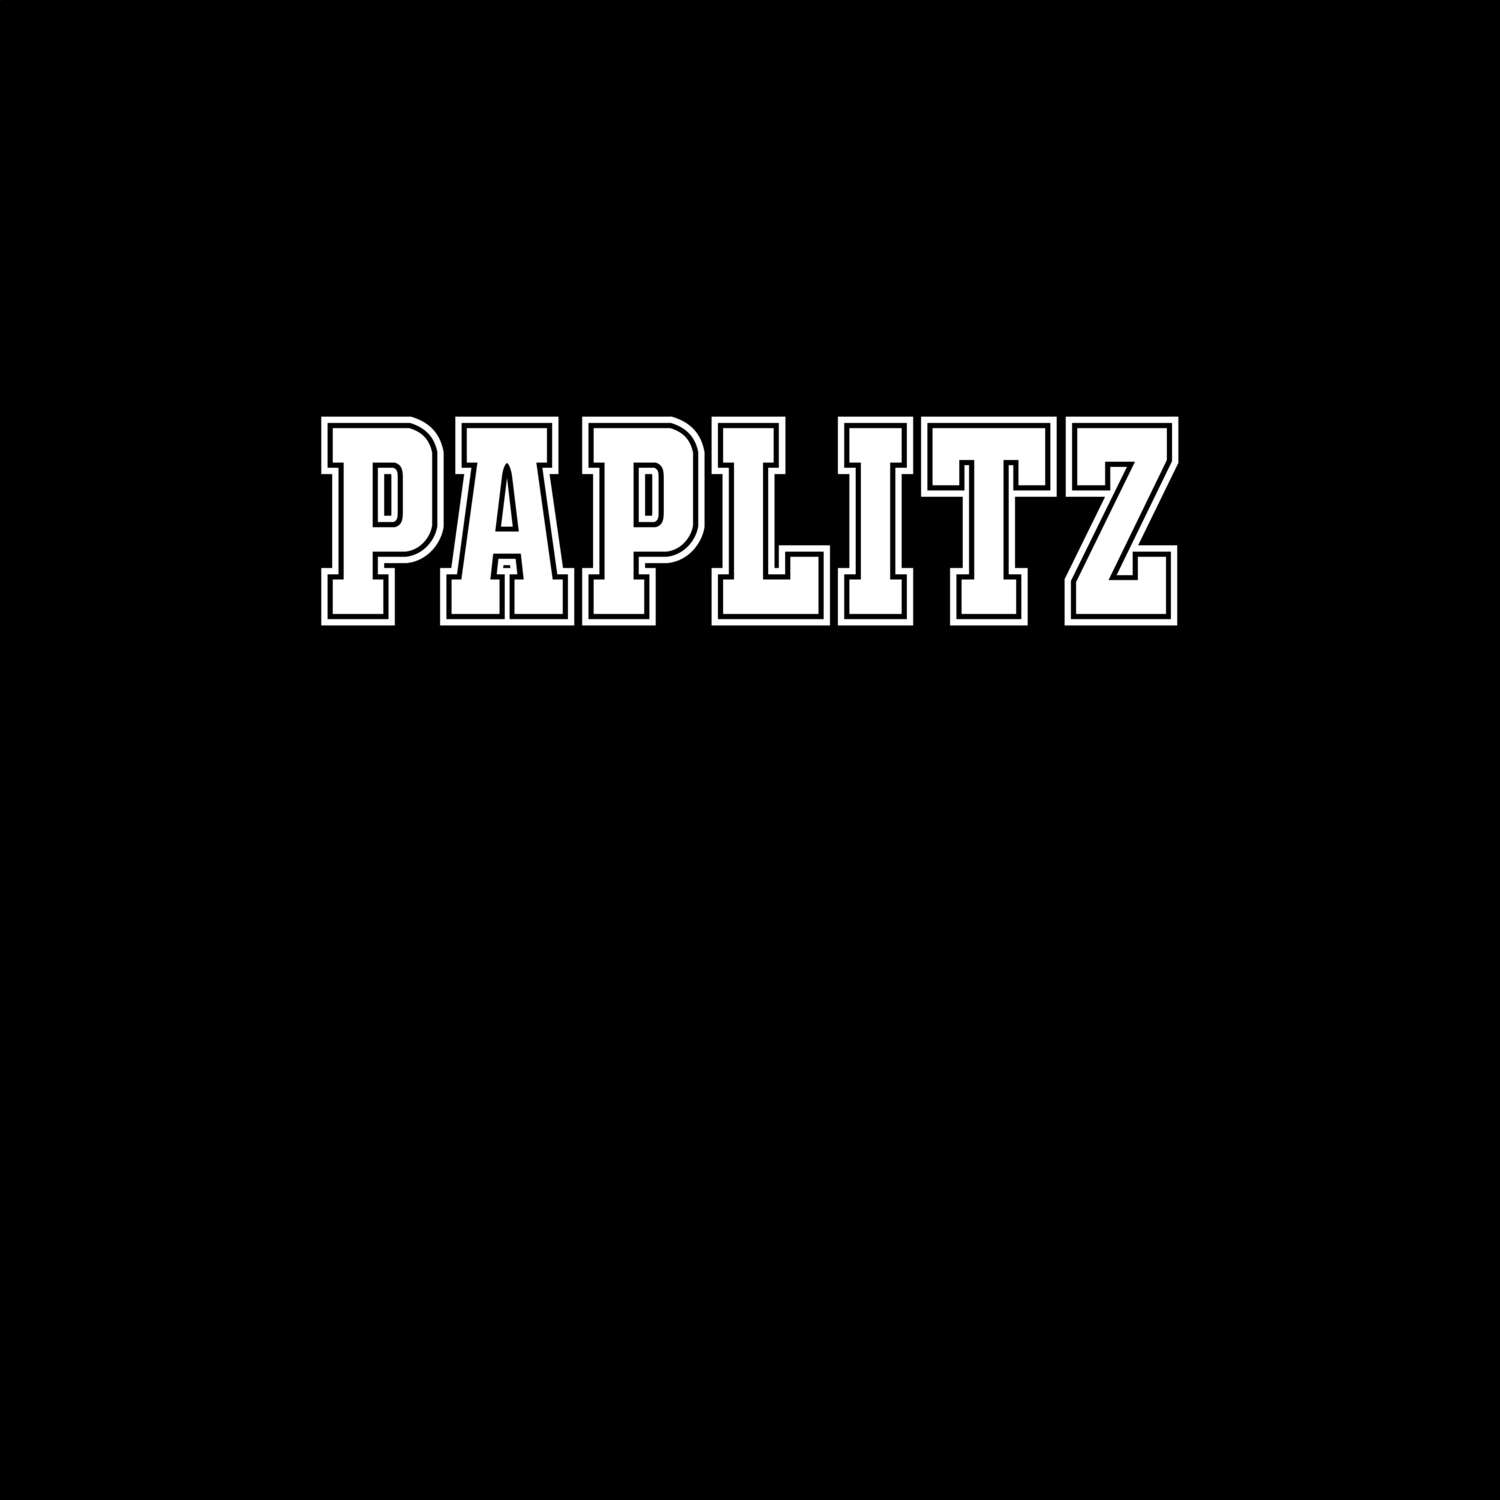 Paplitz T-Shirt »Classic«